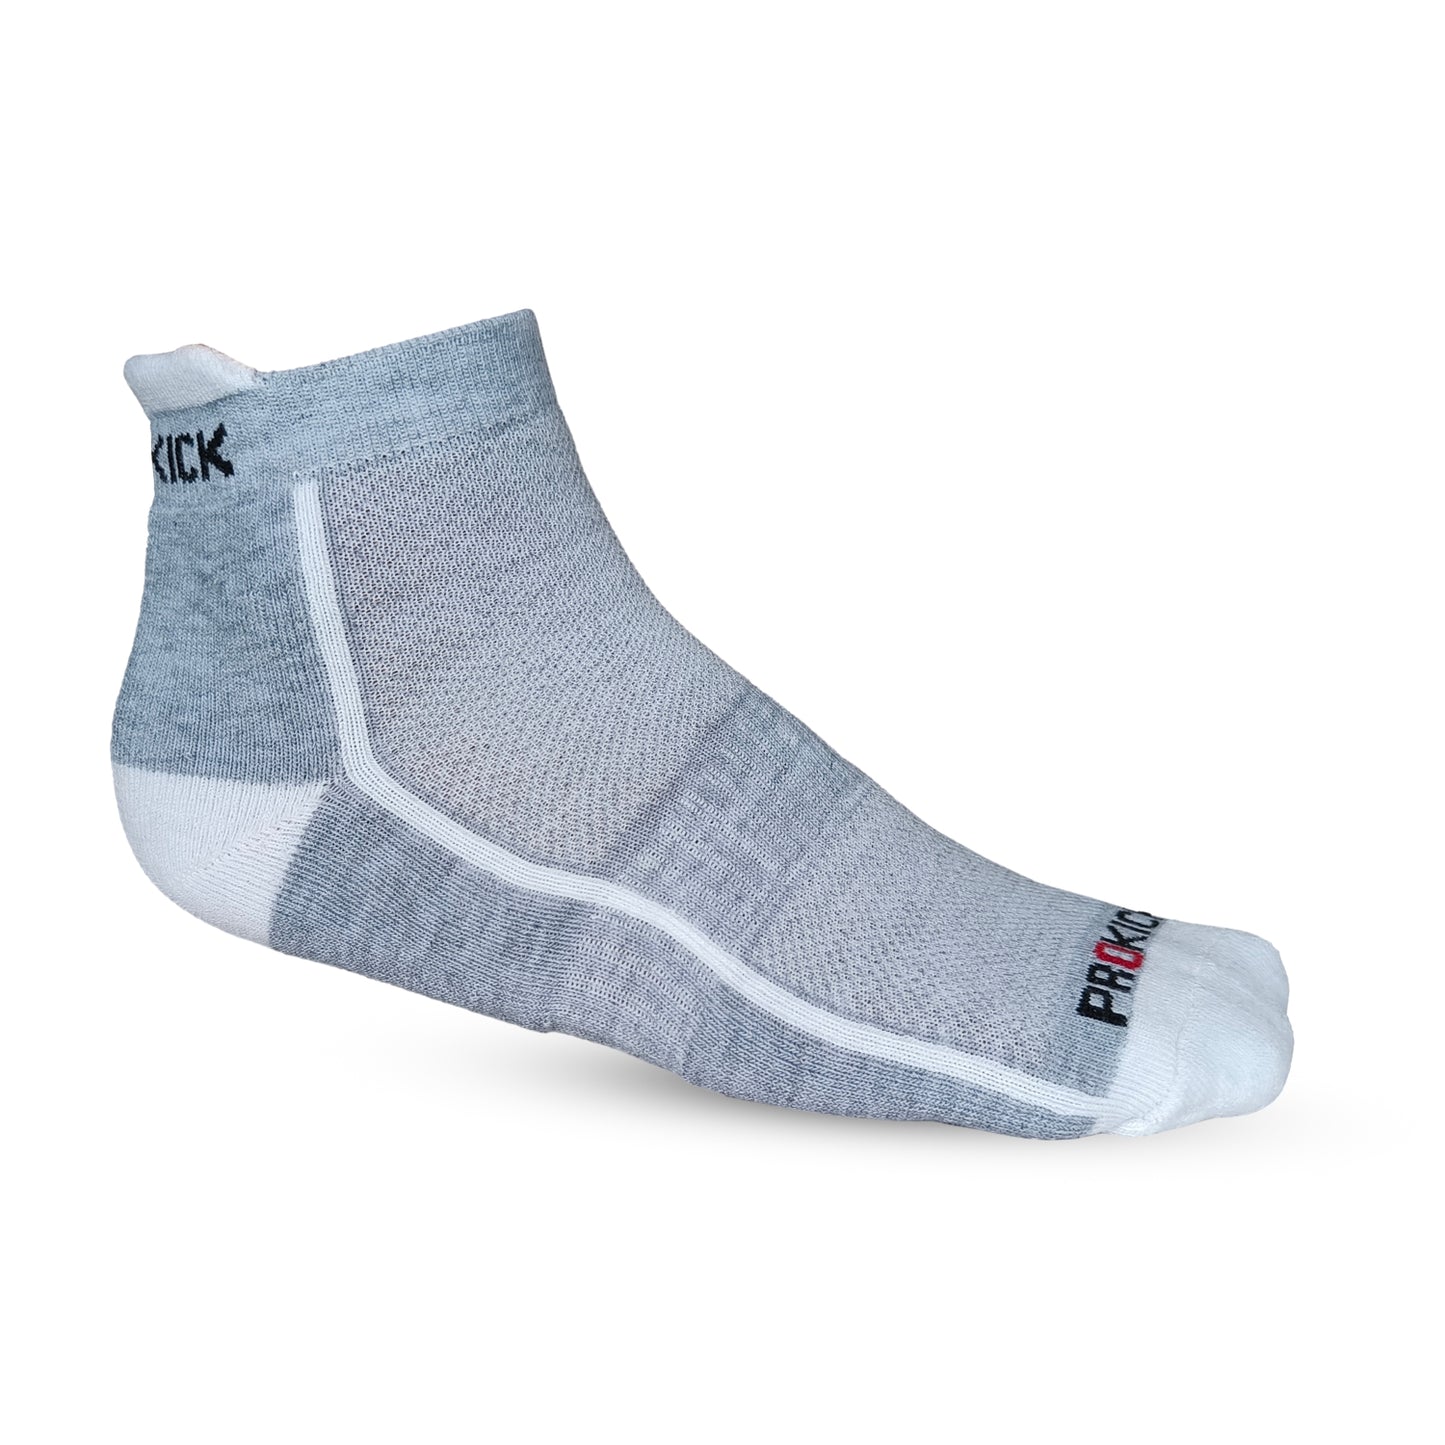 Prokick Low Ankle Socks for Men & Women, Free Size - 1 Pair - Best Price online Prokicksports.com